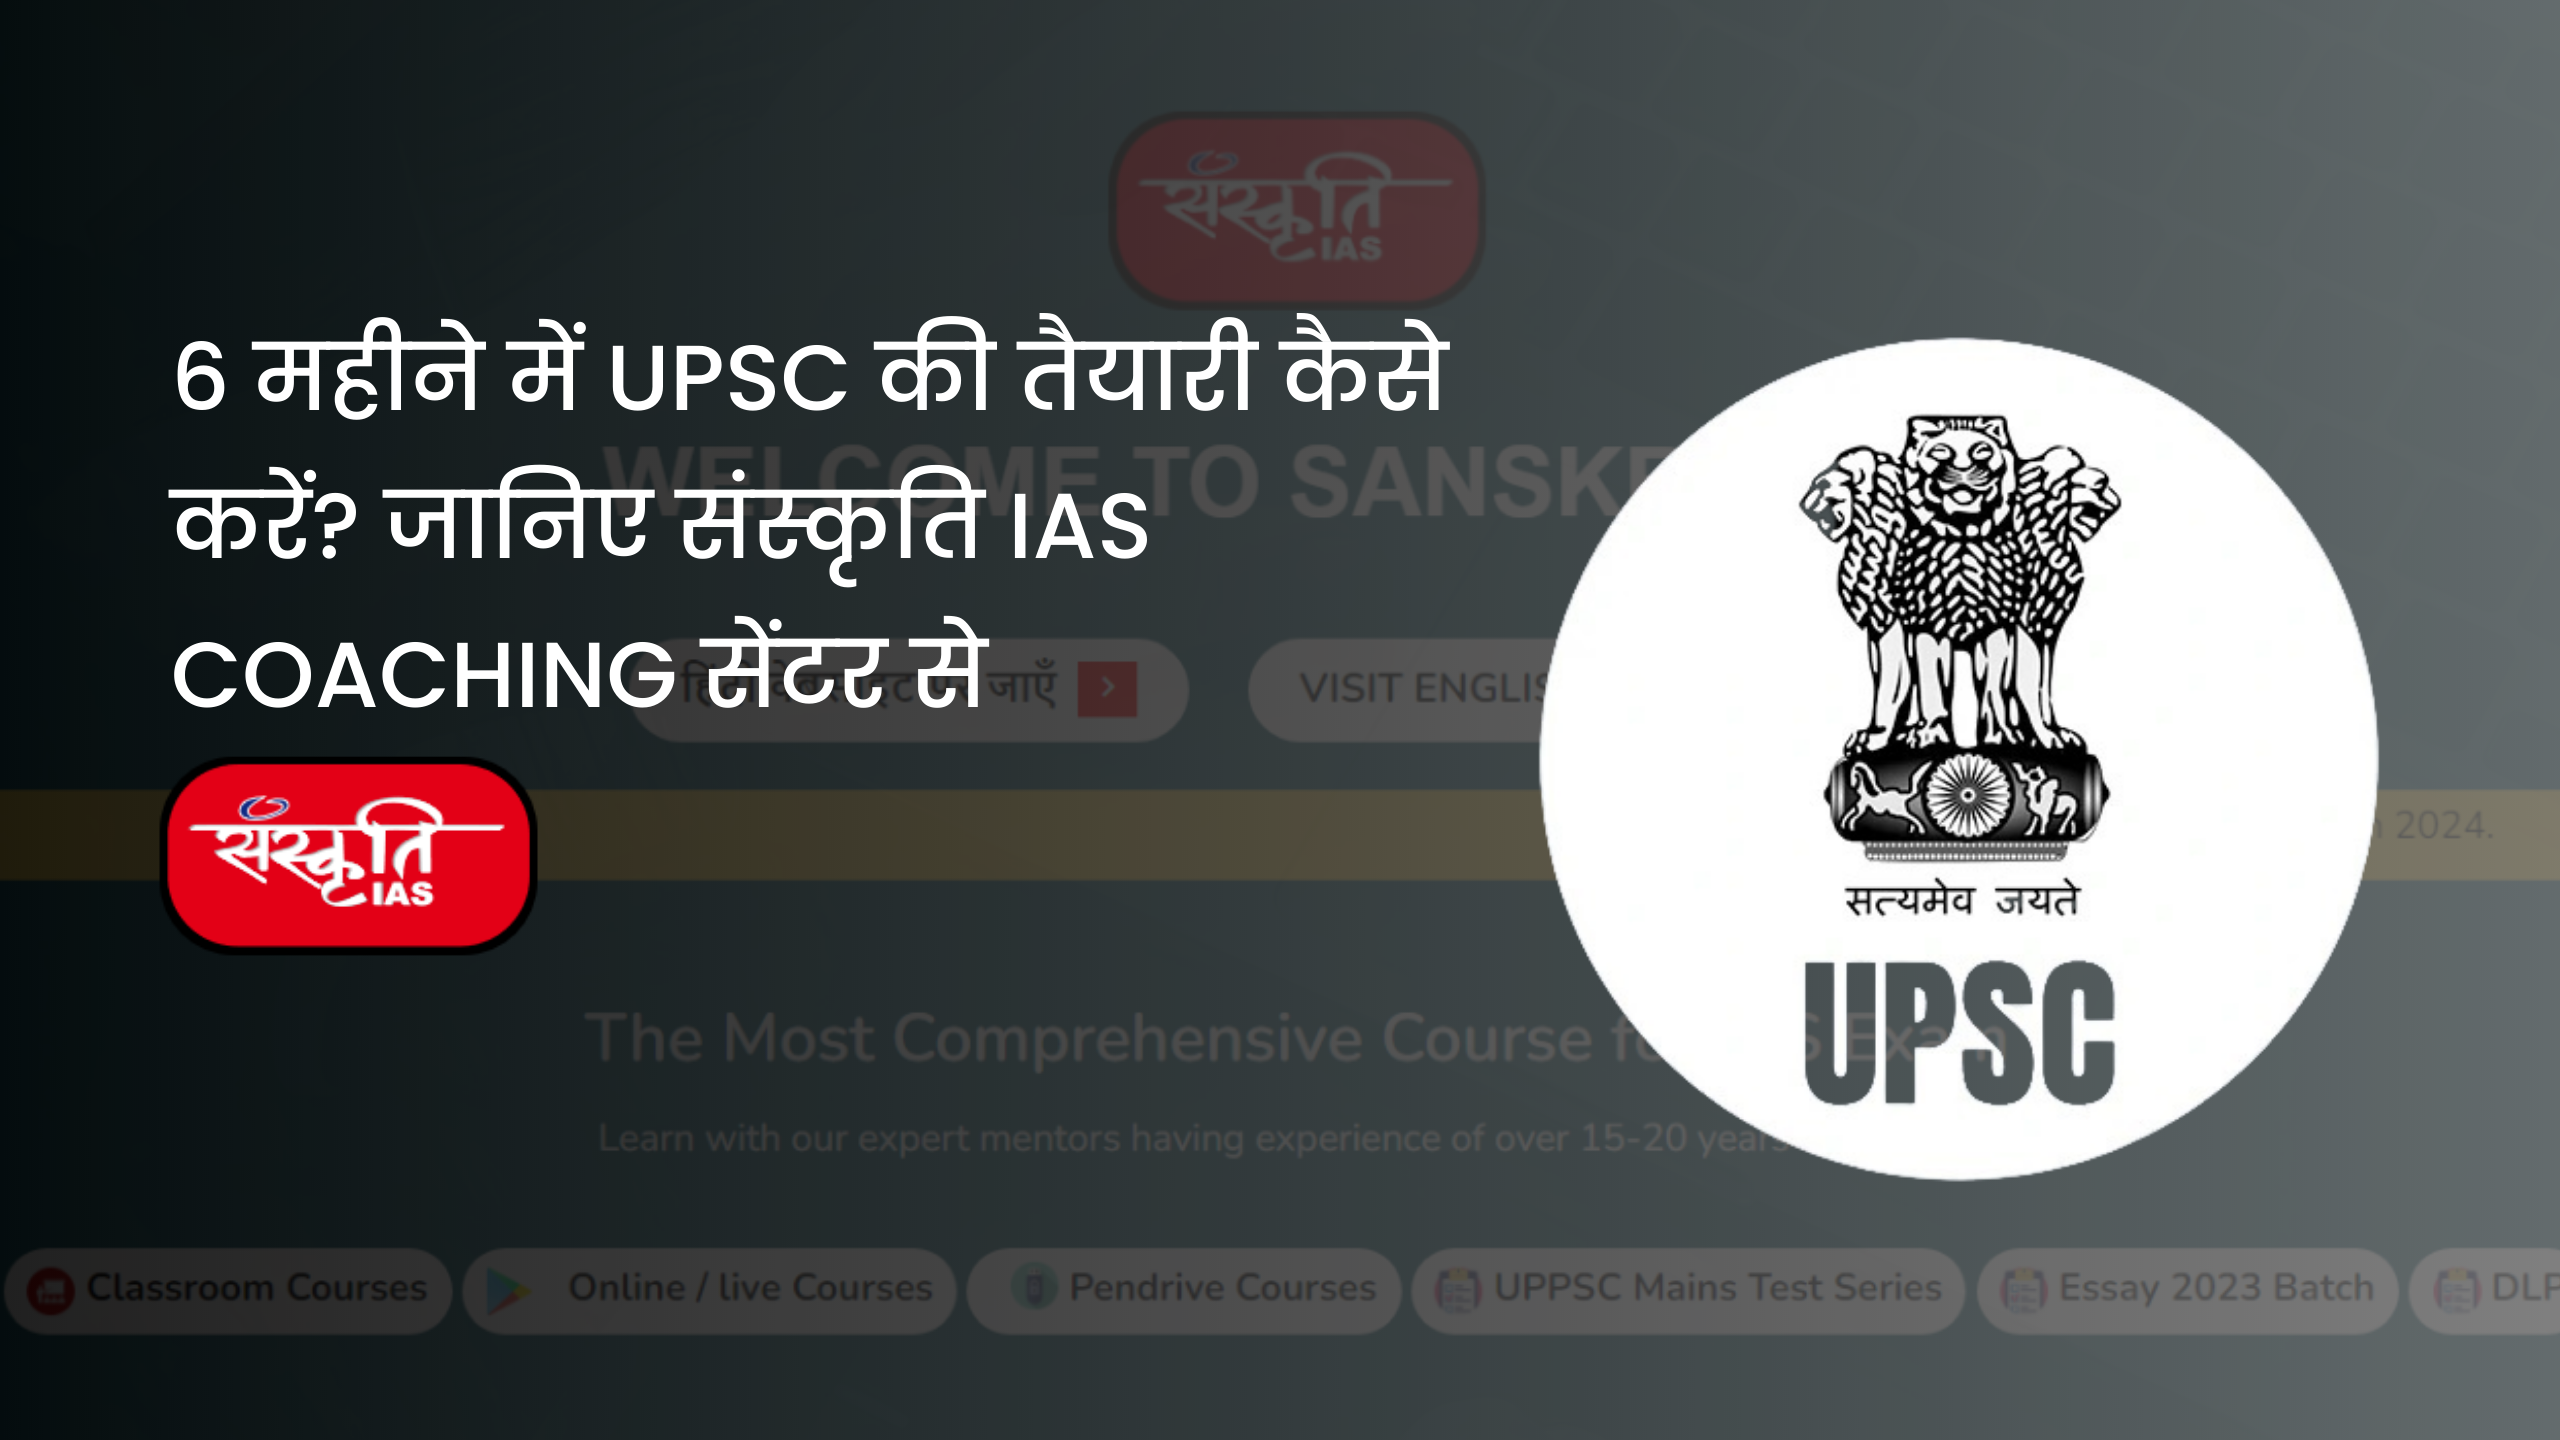 UPSC-logo - GovInfo.me